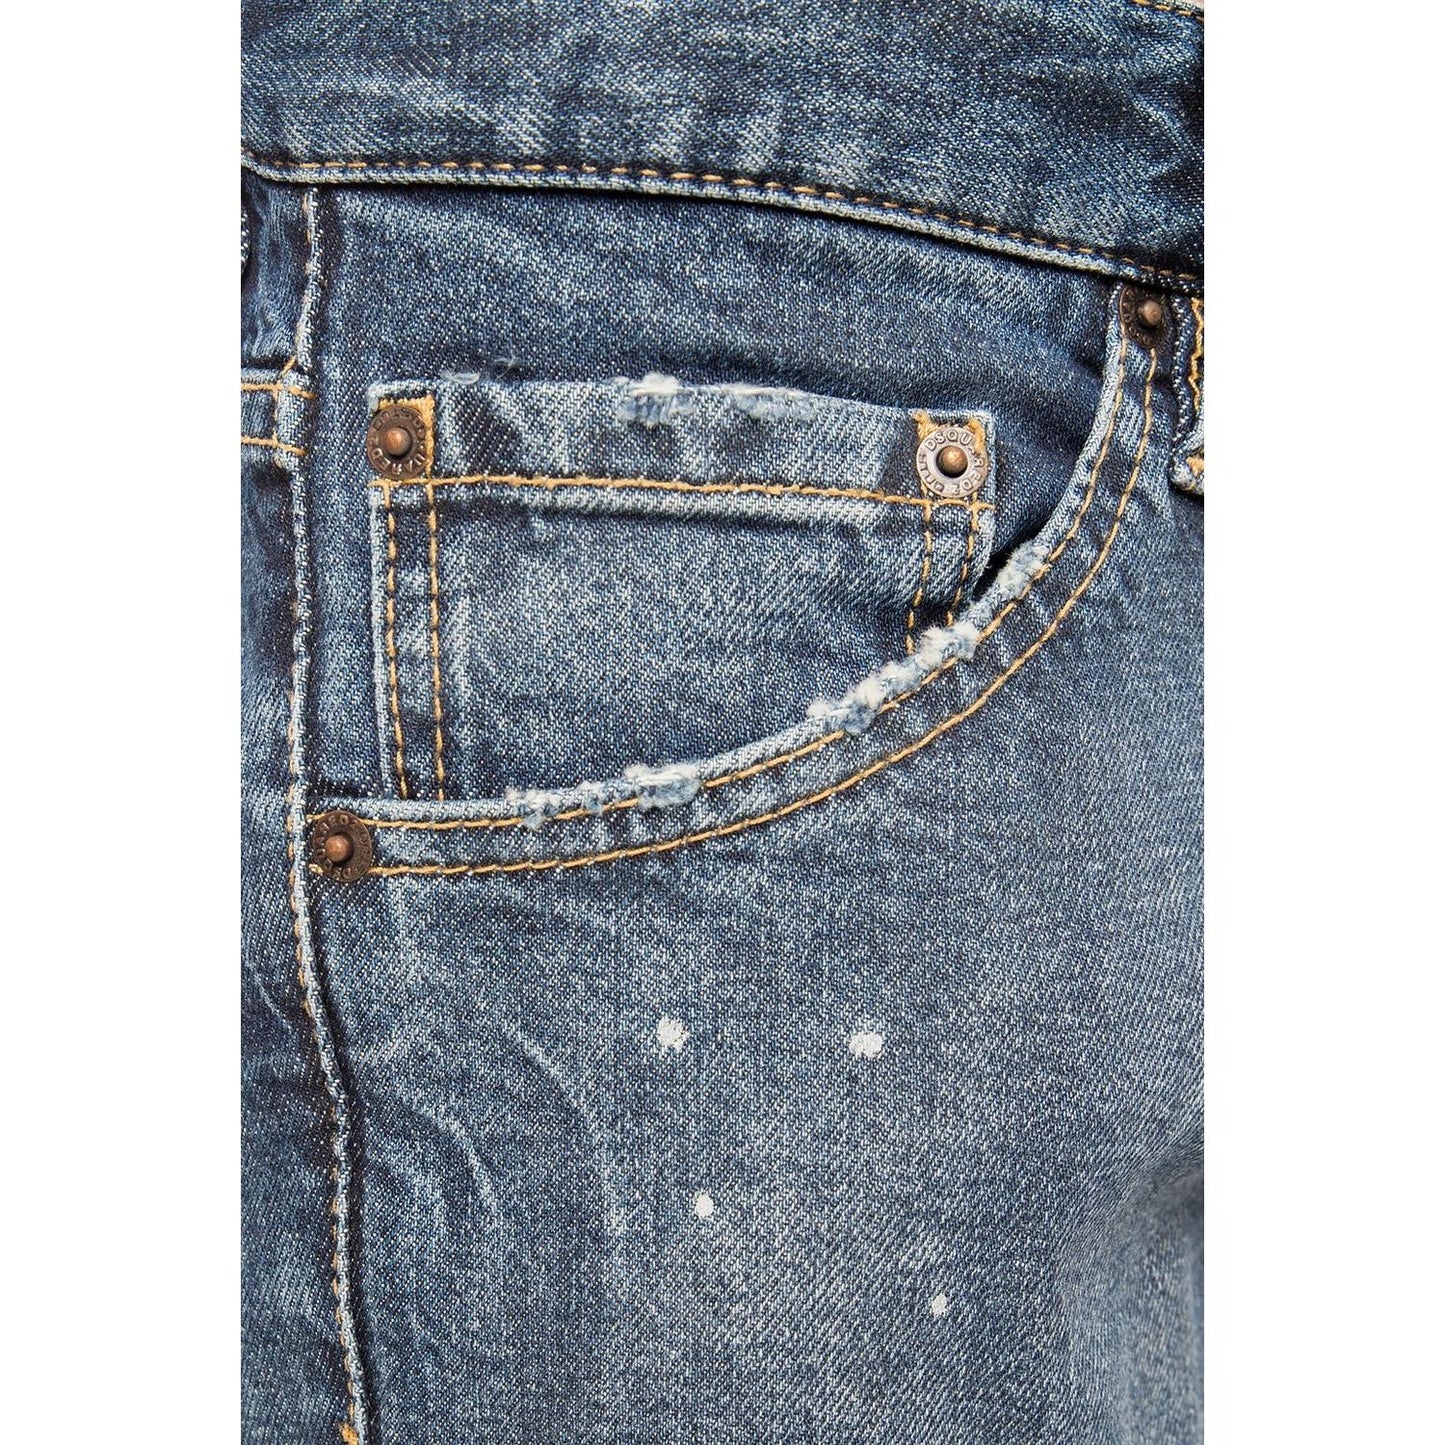 Dsquared² Sleek Navy Distressed Cool Guy Jeans blue-cotton-jeans-pants-3 stock_product_image_4218_607473957-d427471d-f44_d9b6b50c-ace7-43f2-a7d4-c39fd6dfc58a.jpg